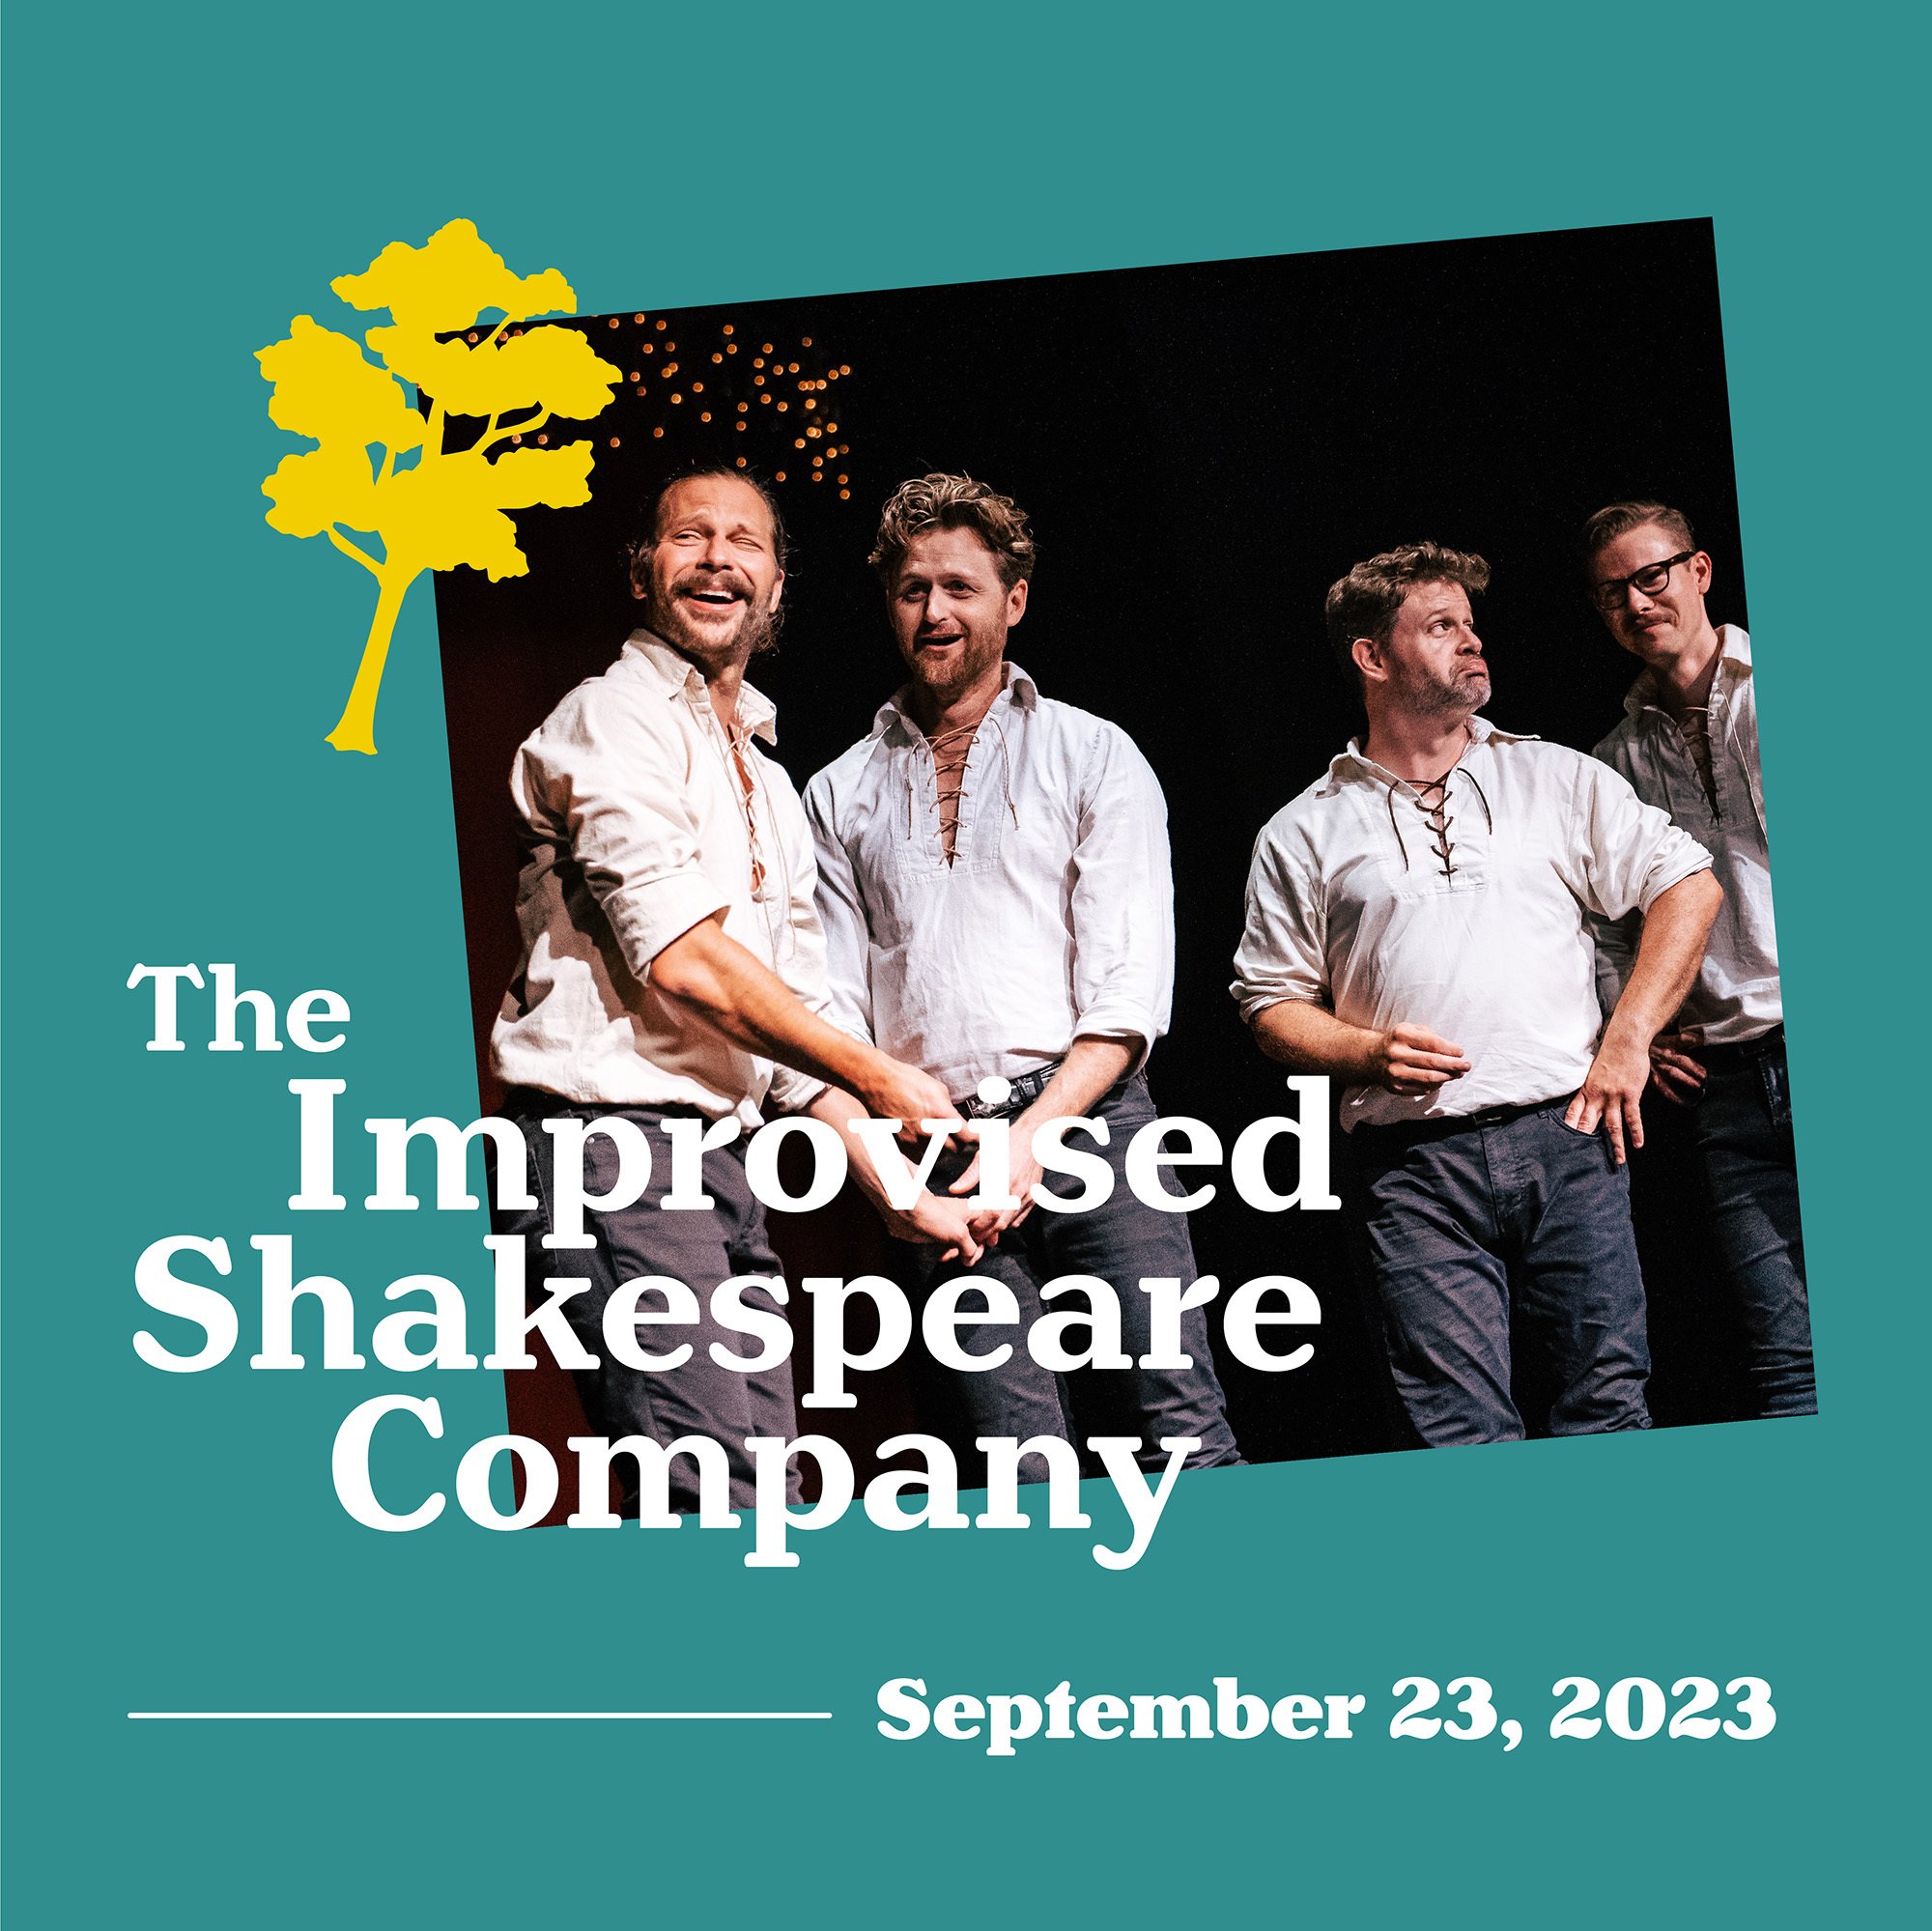 9/23/2023 The Improvised Shakespeare Company